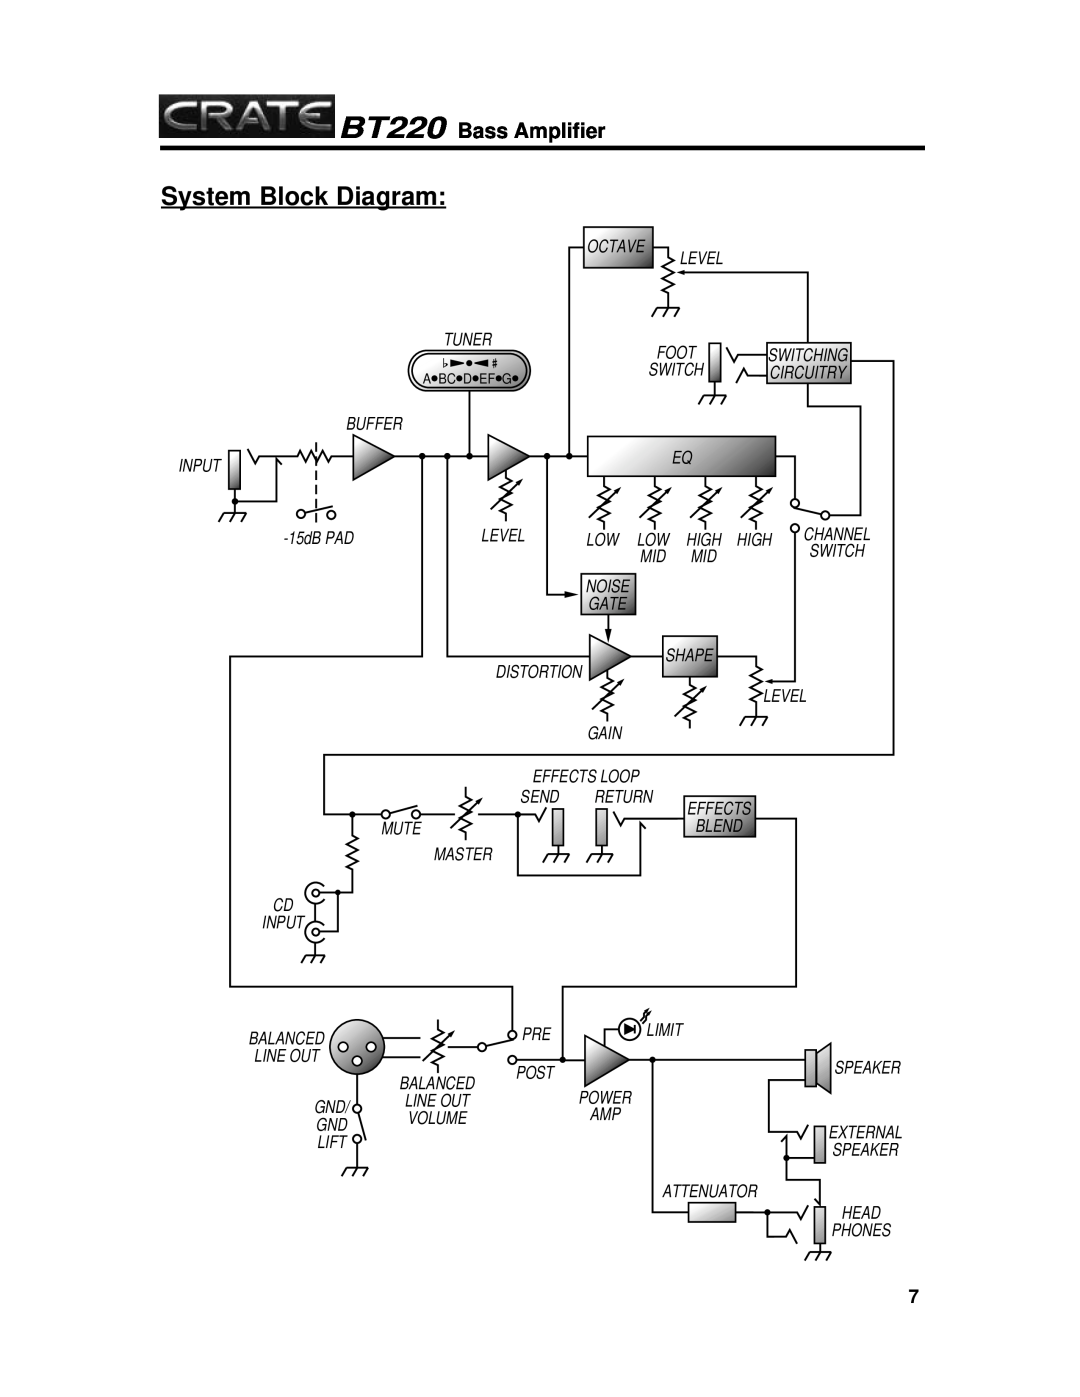 Crate Amplifiers manual System Block Diagram, BT220 Bass Amplifier 